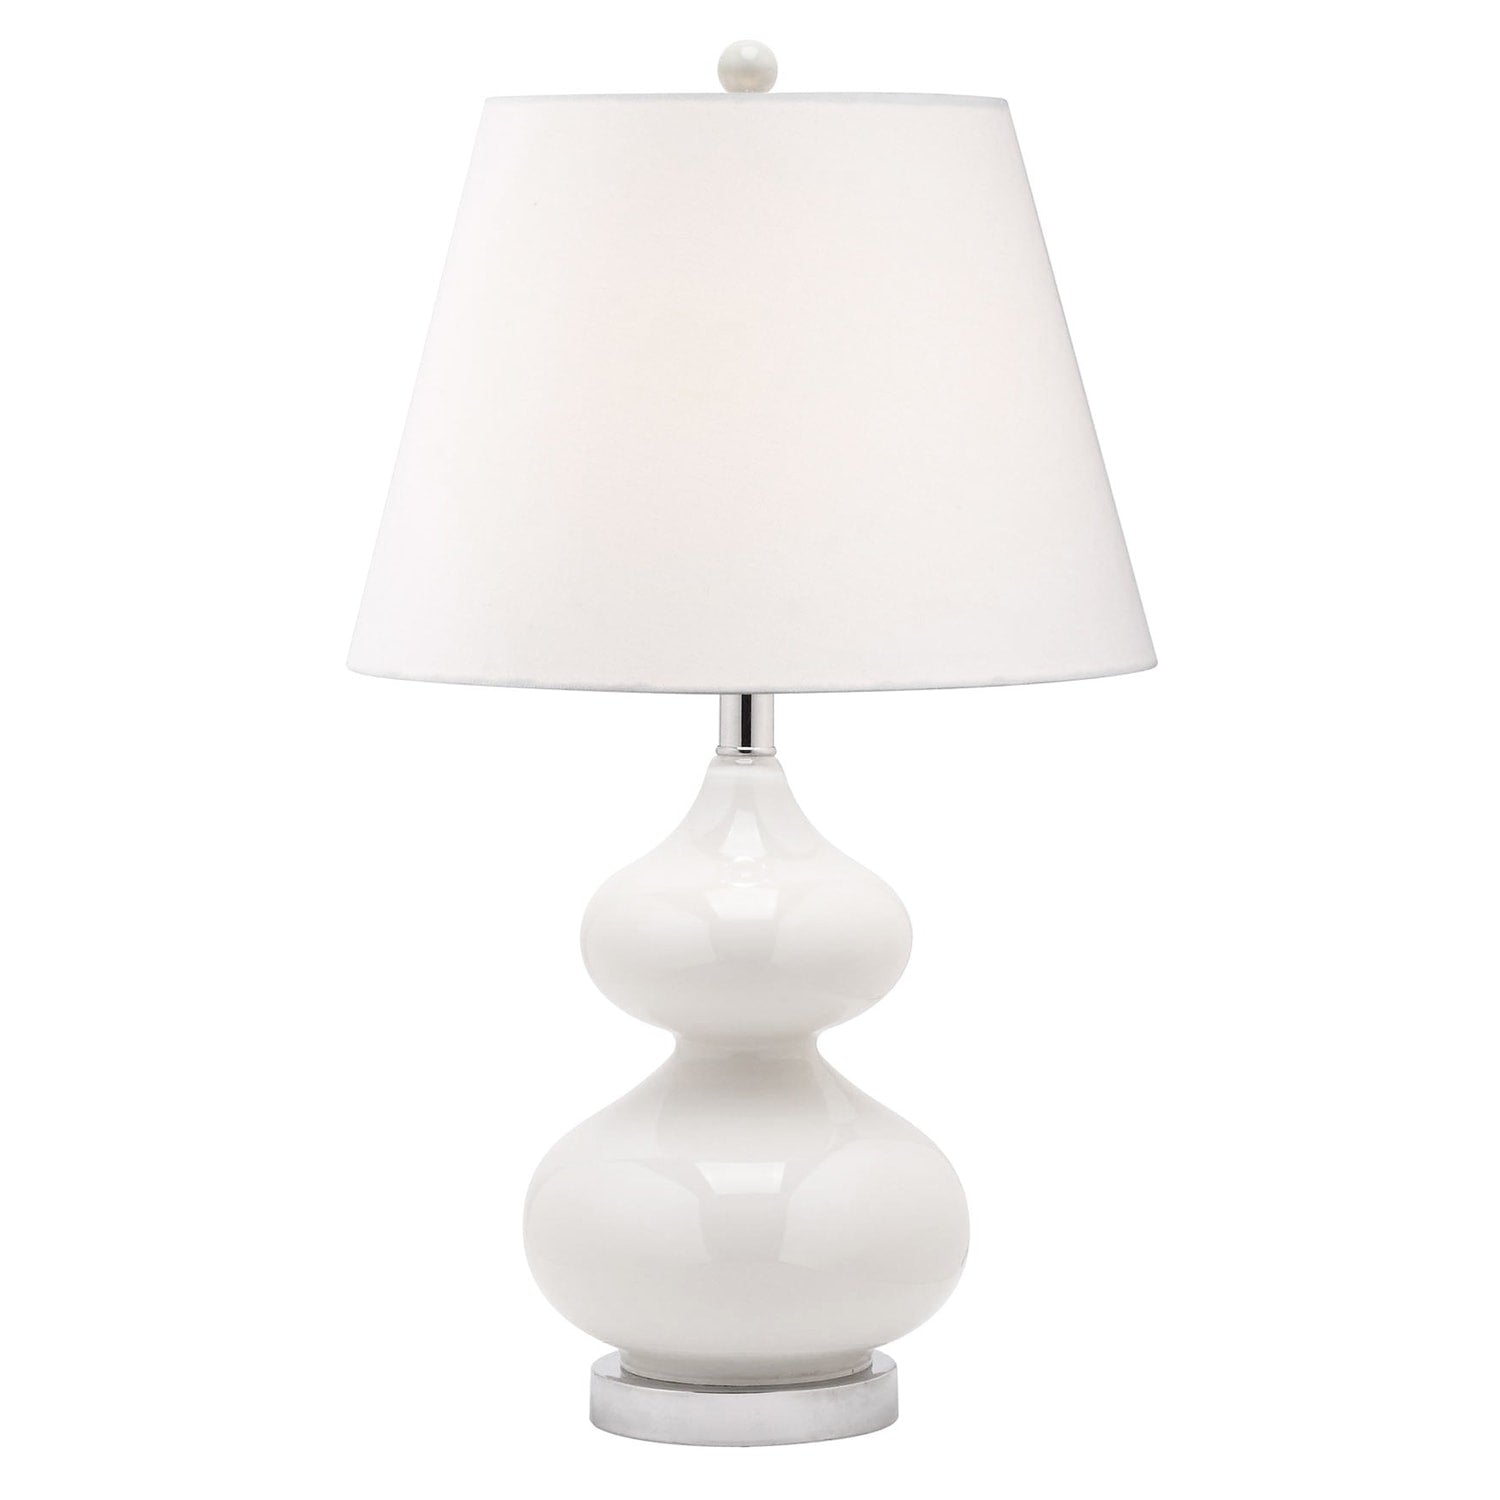 Dainolite 1 Light Incandescent Table Lamp White Glass Finish with White Shade - Renoz